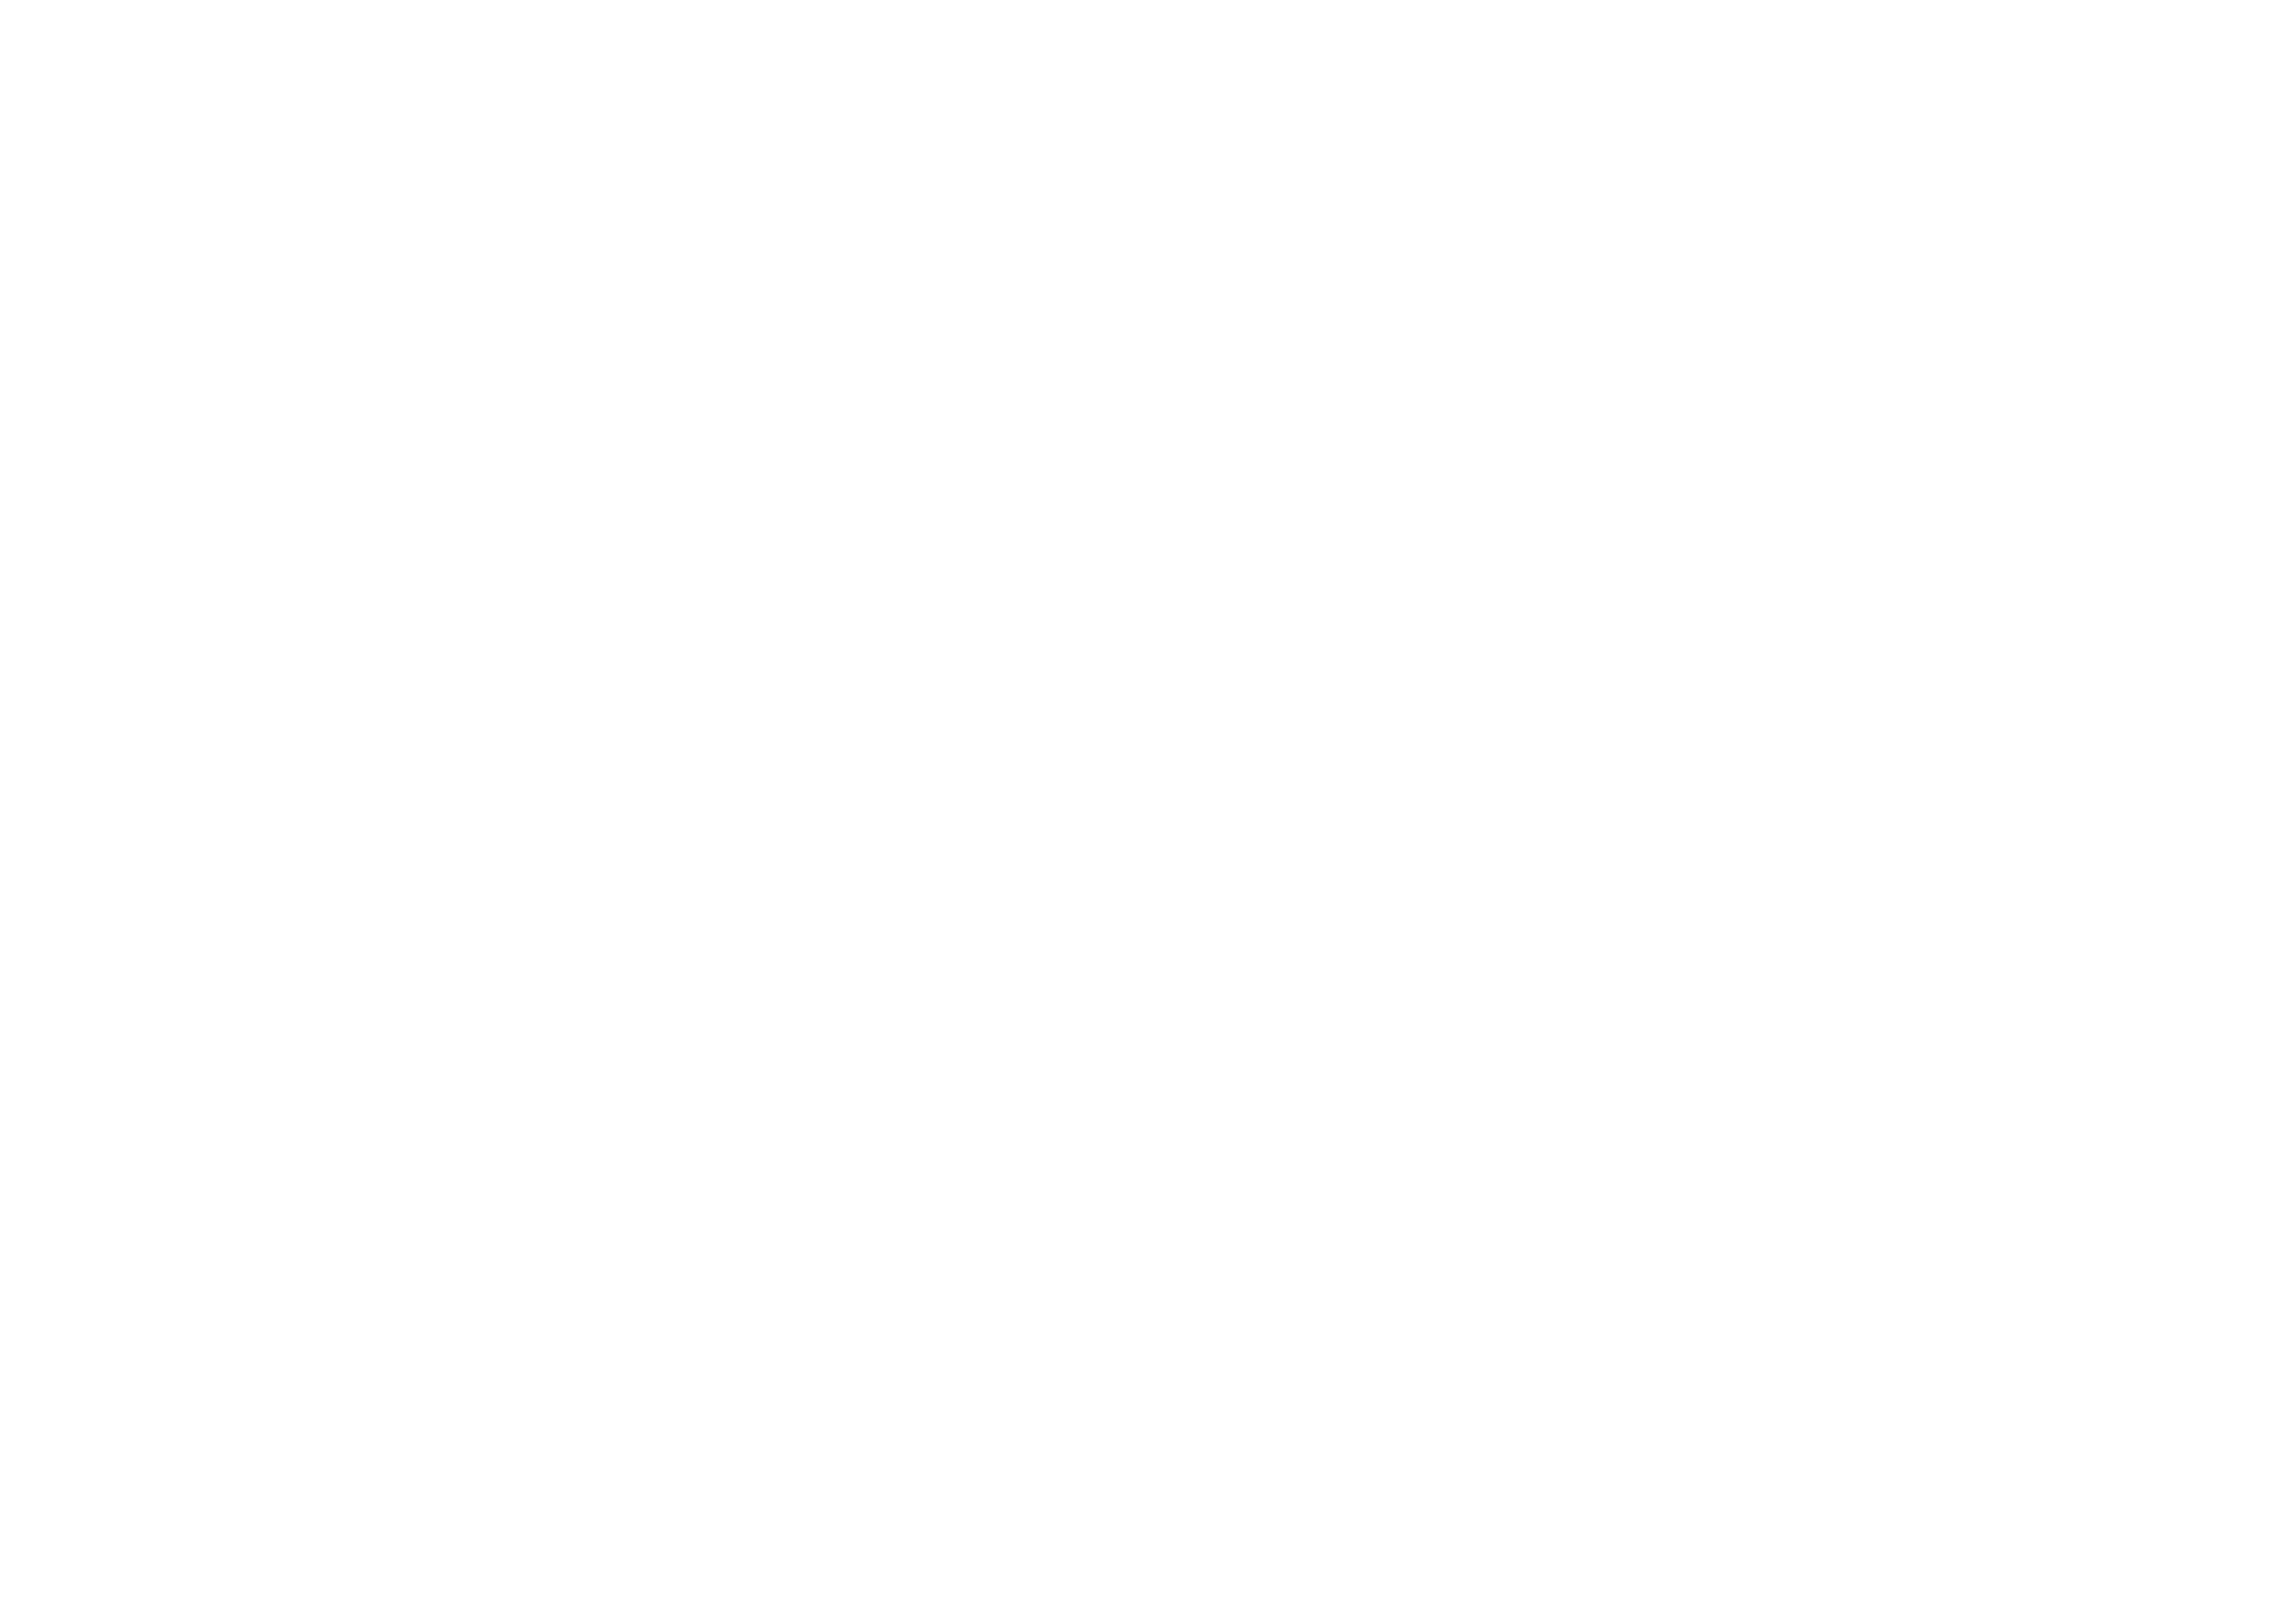 Formul’ Optique